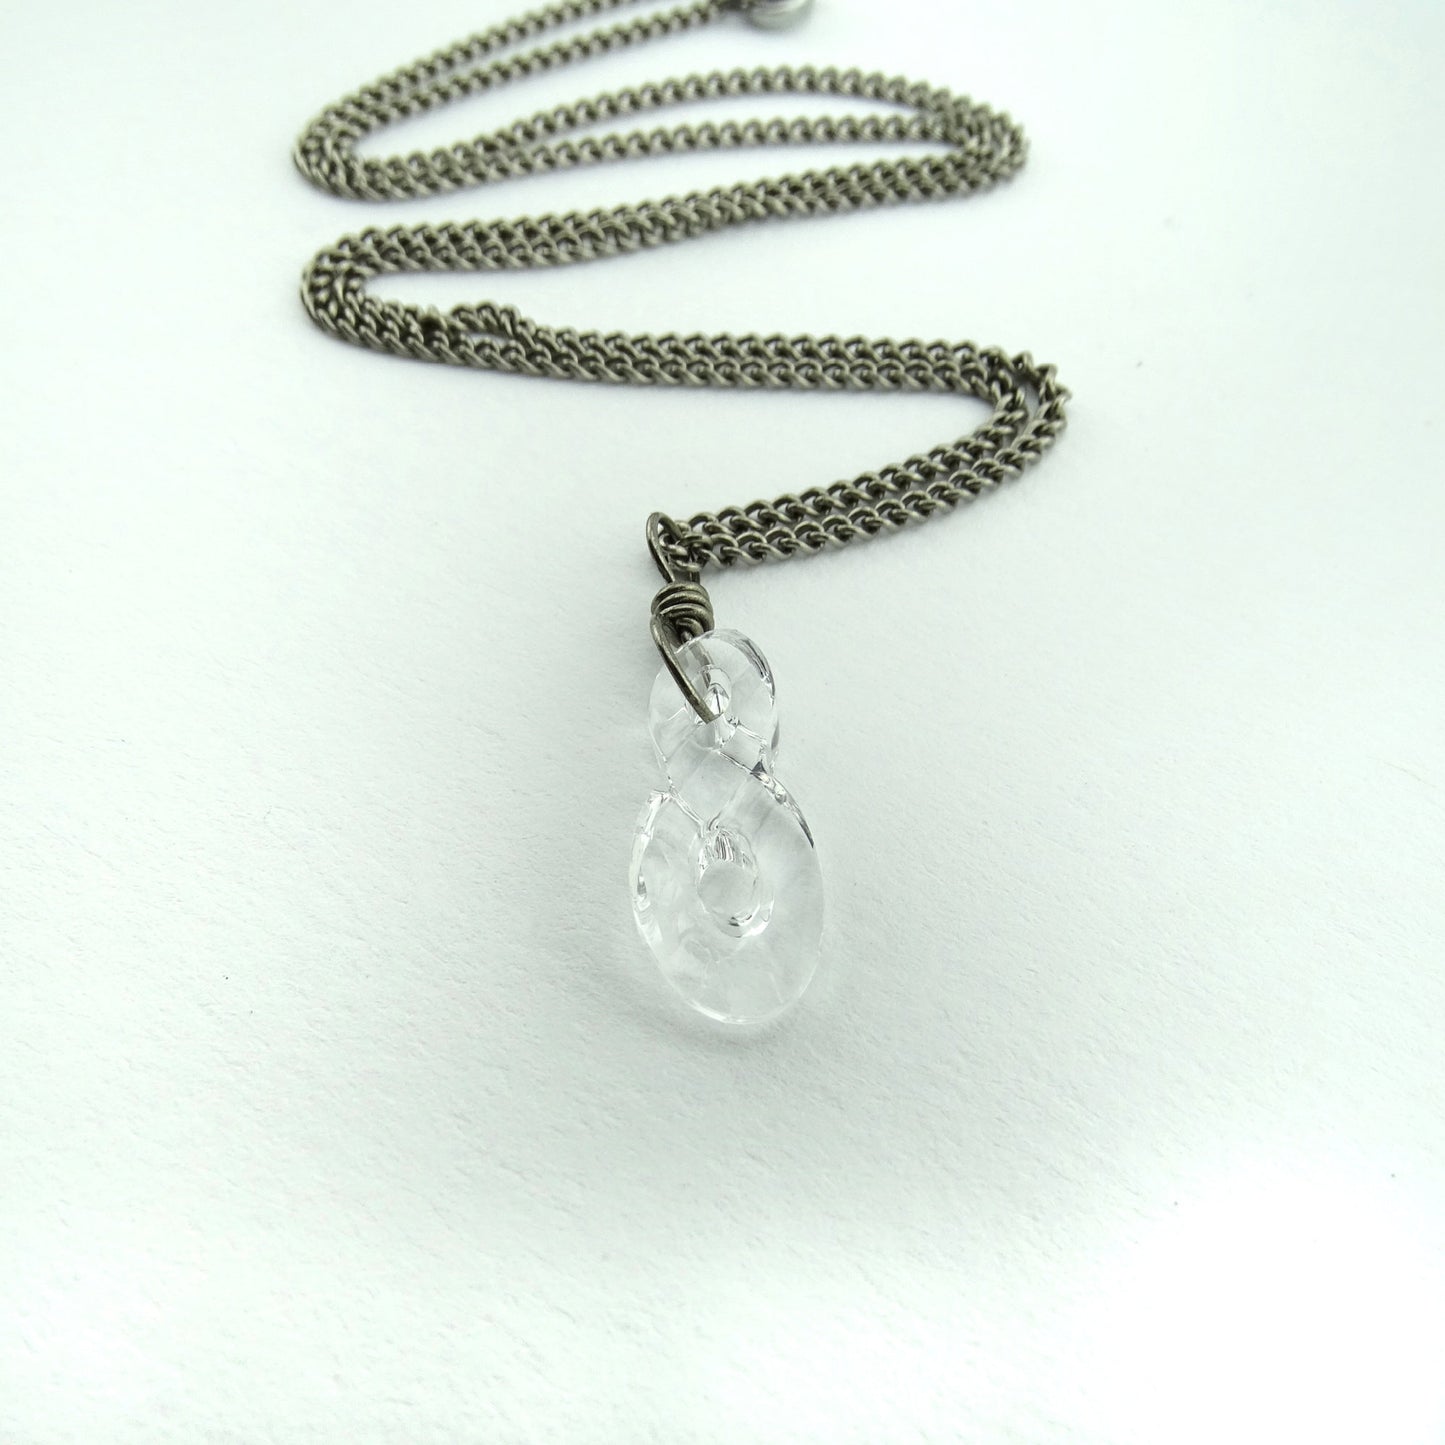 Clear Crystal Infinity Symbol Titanium Necklace, Swarovski Eternity Necklace for Sensitive Skin, Nickel Free Hypoallergenic Niobium Necklace